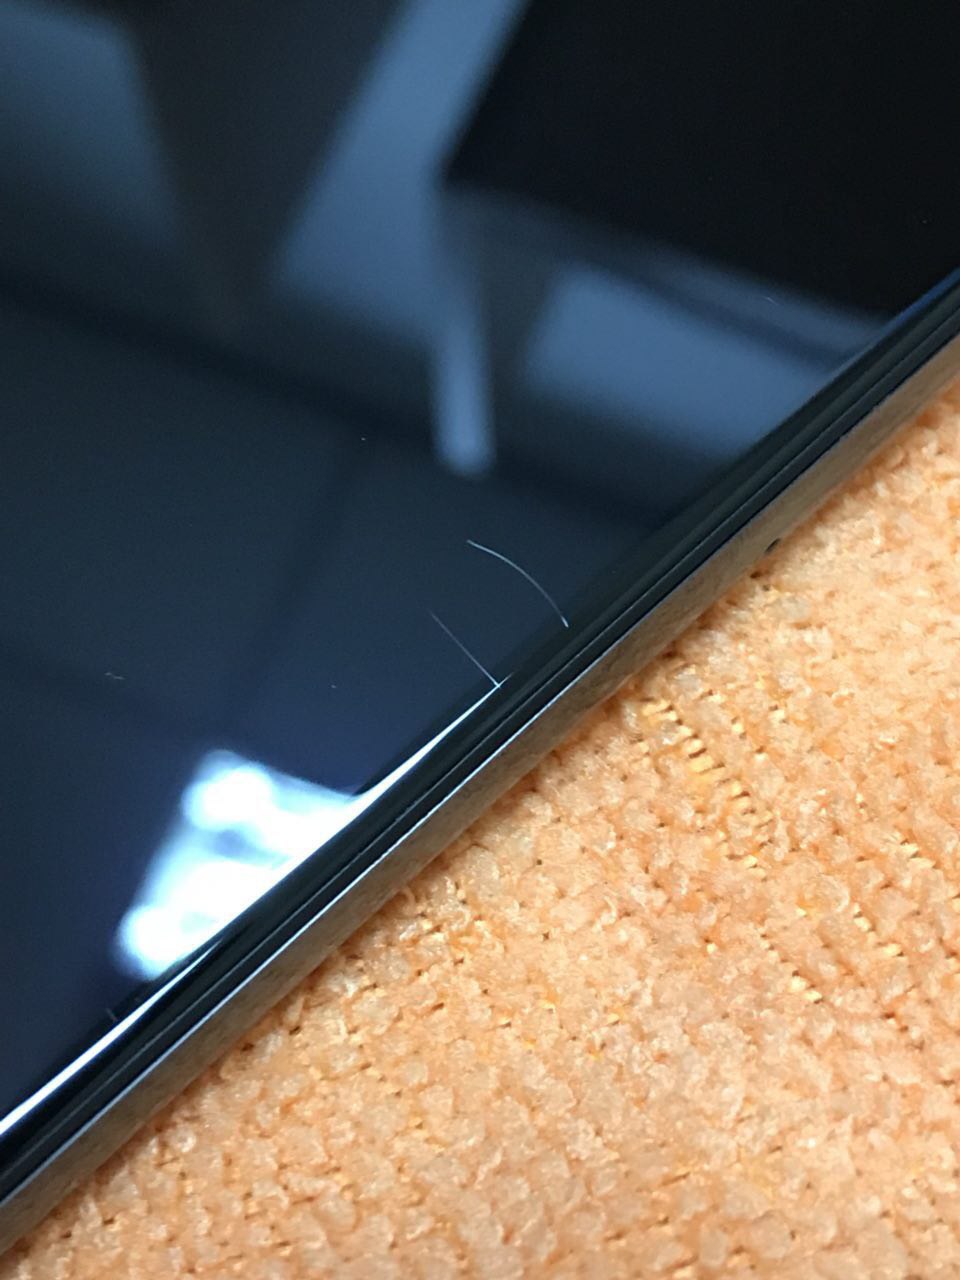 DIY scratched screen repair: Magic and myths - CNET